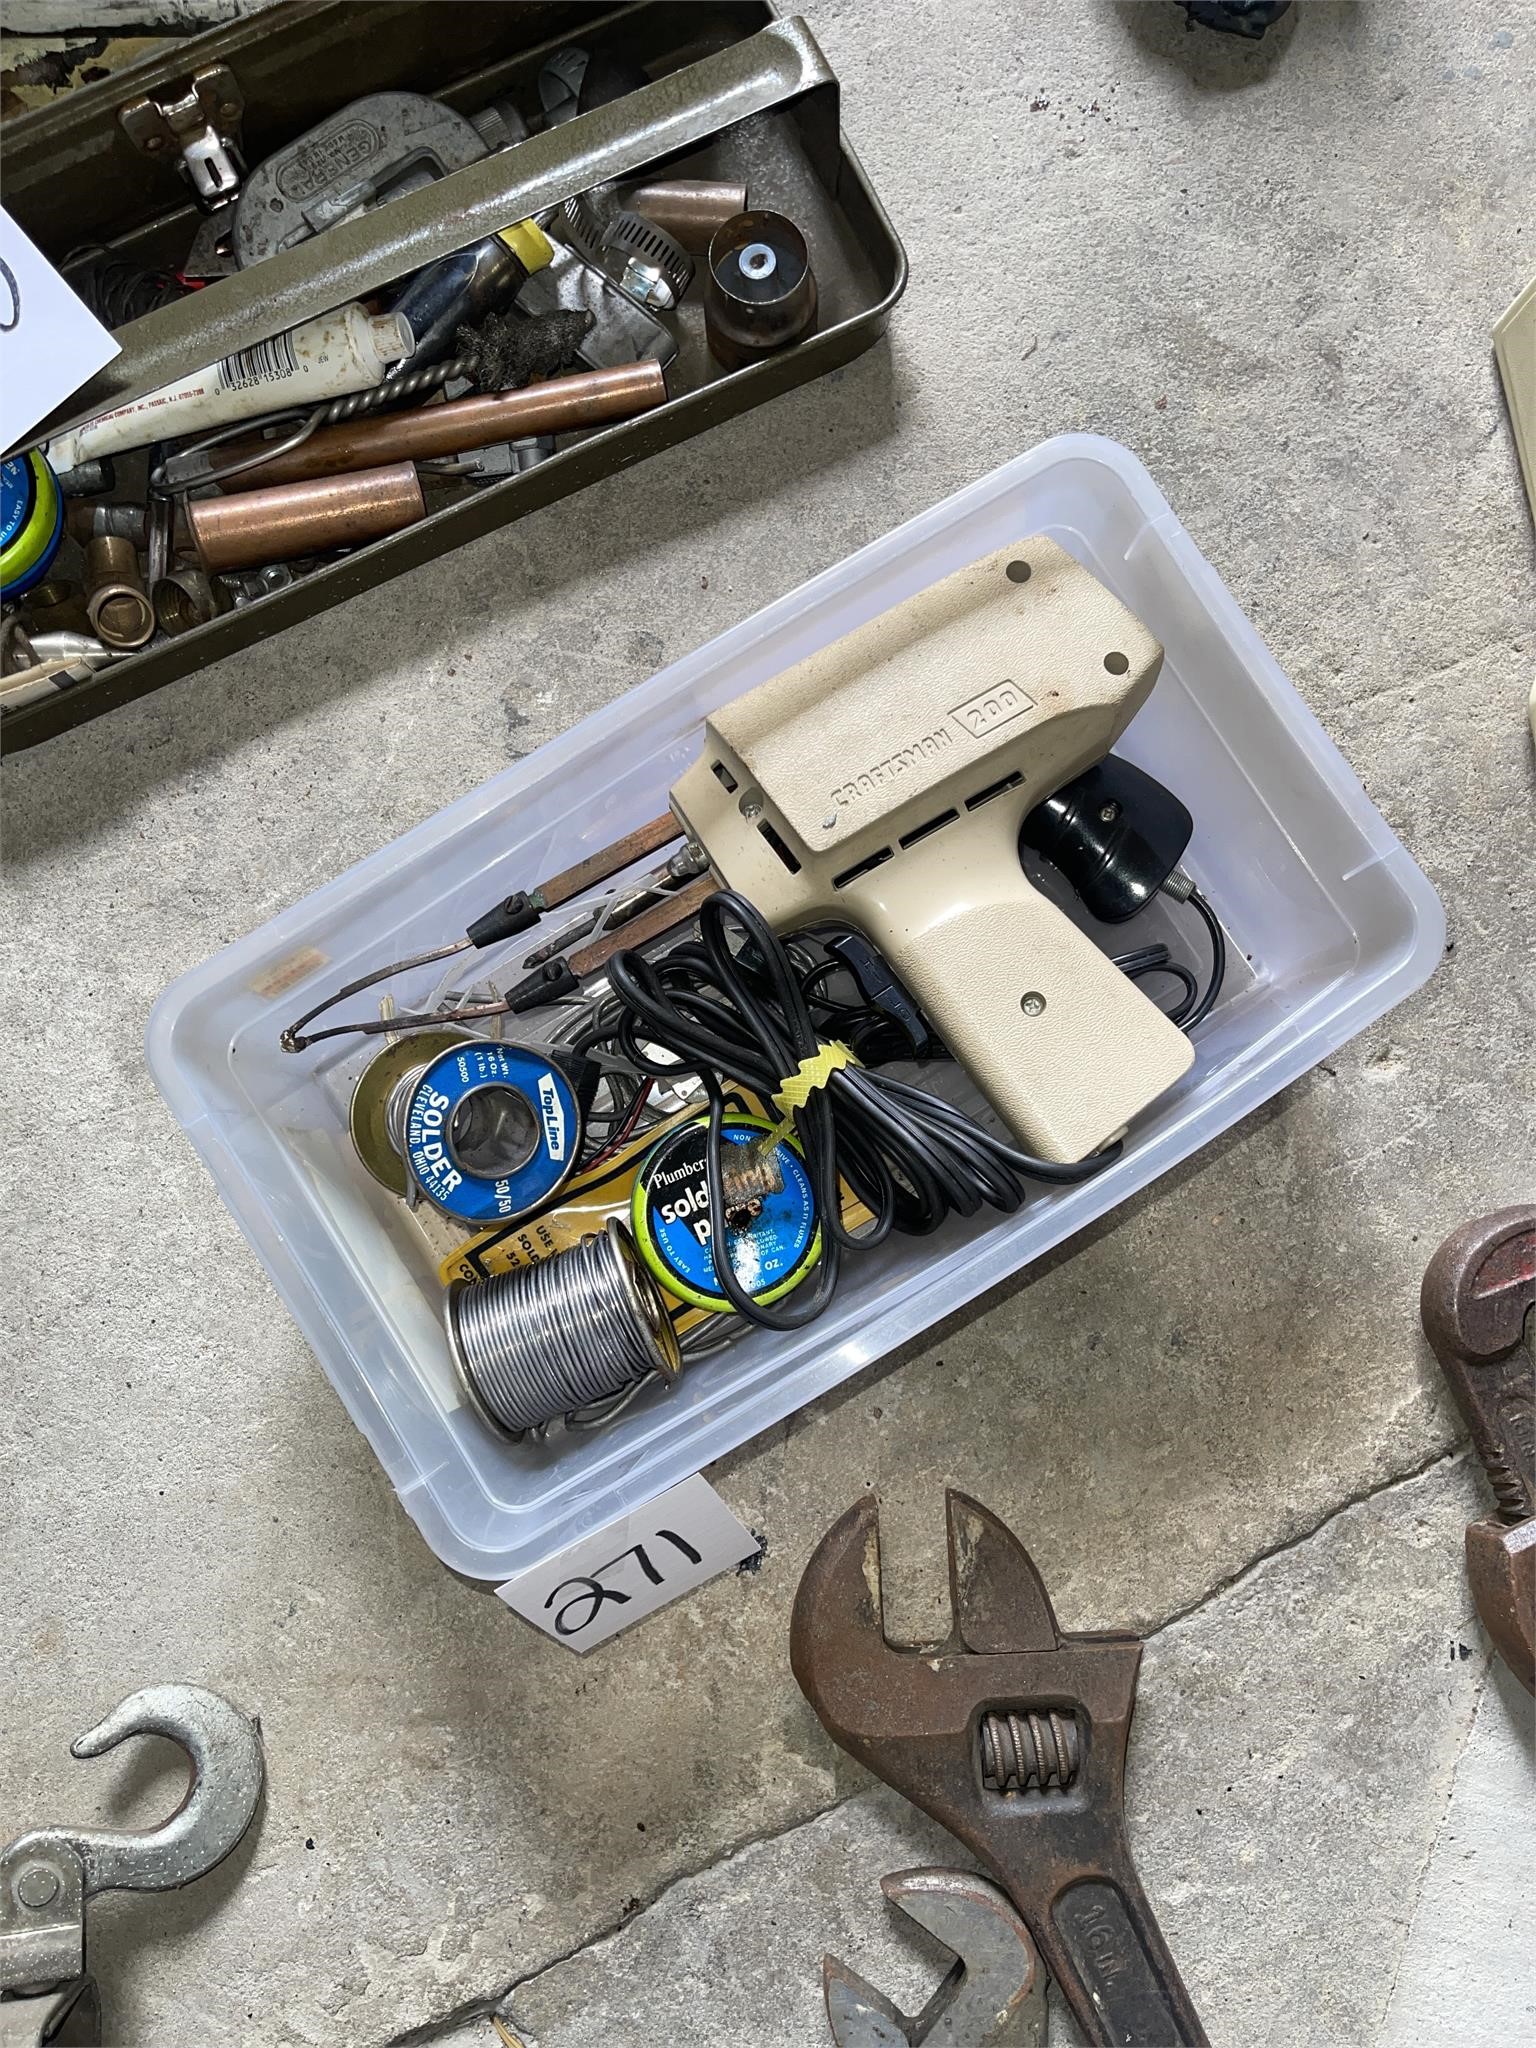 Craftsman soldering gun and solder